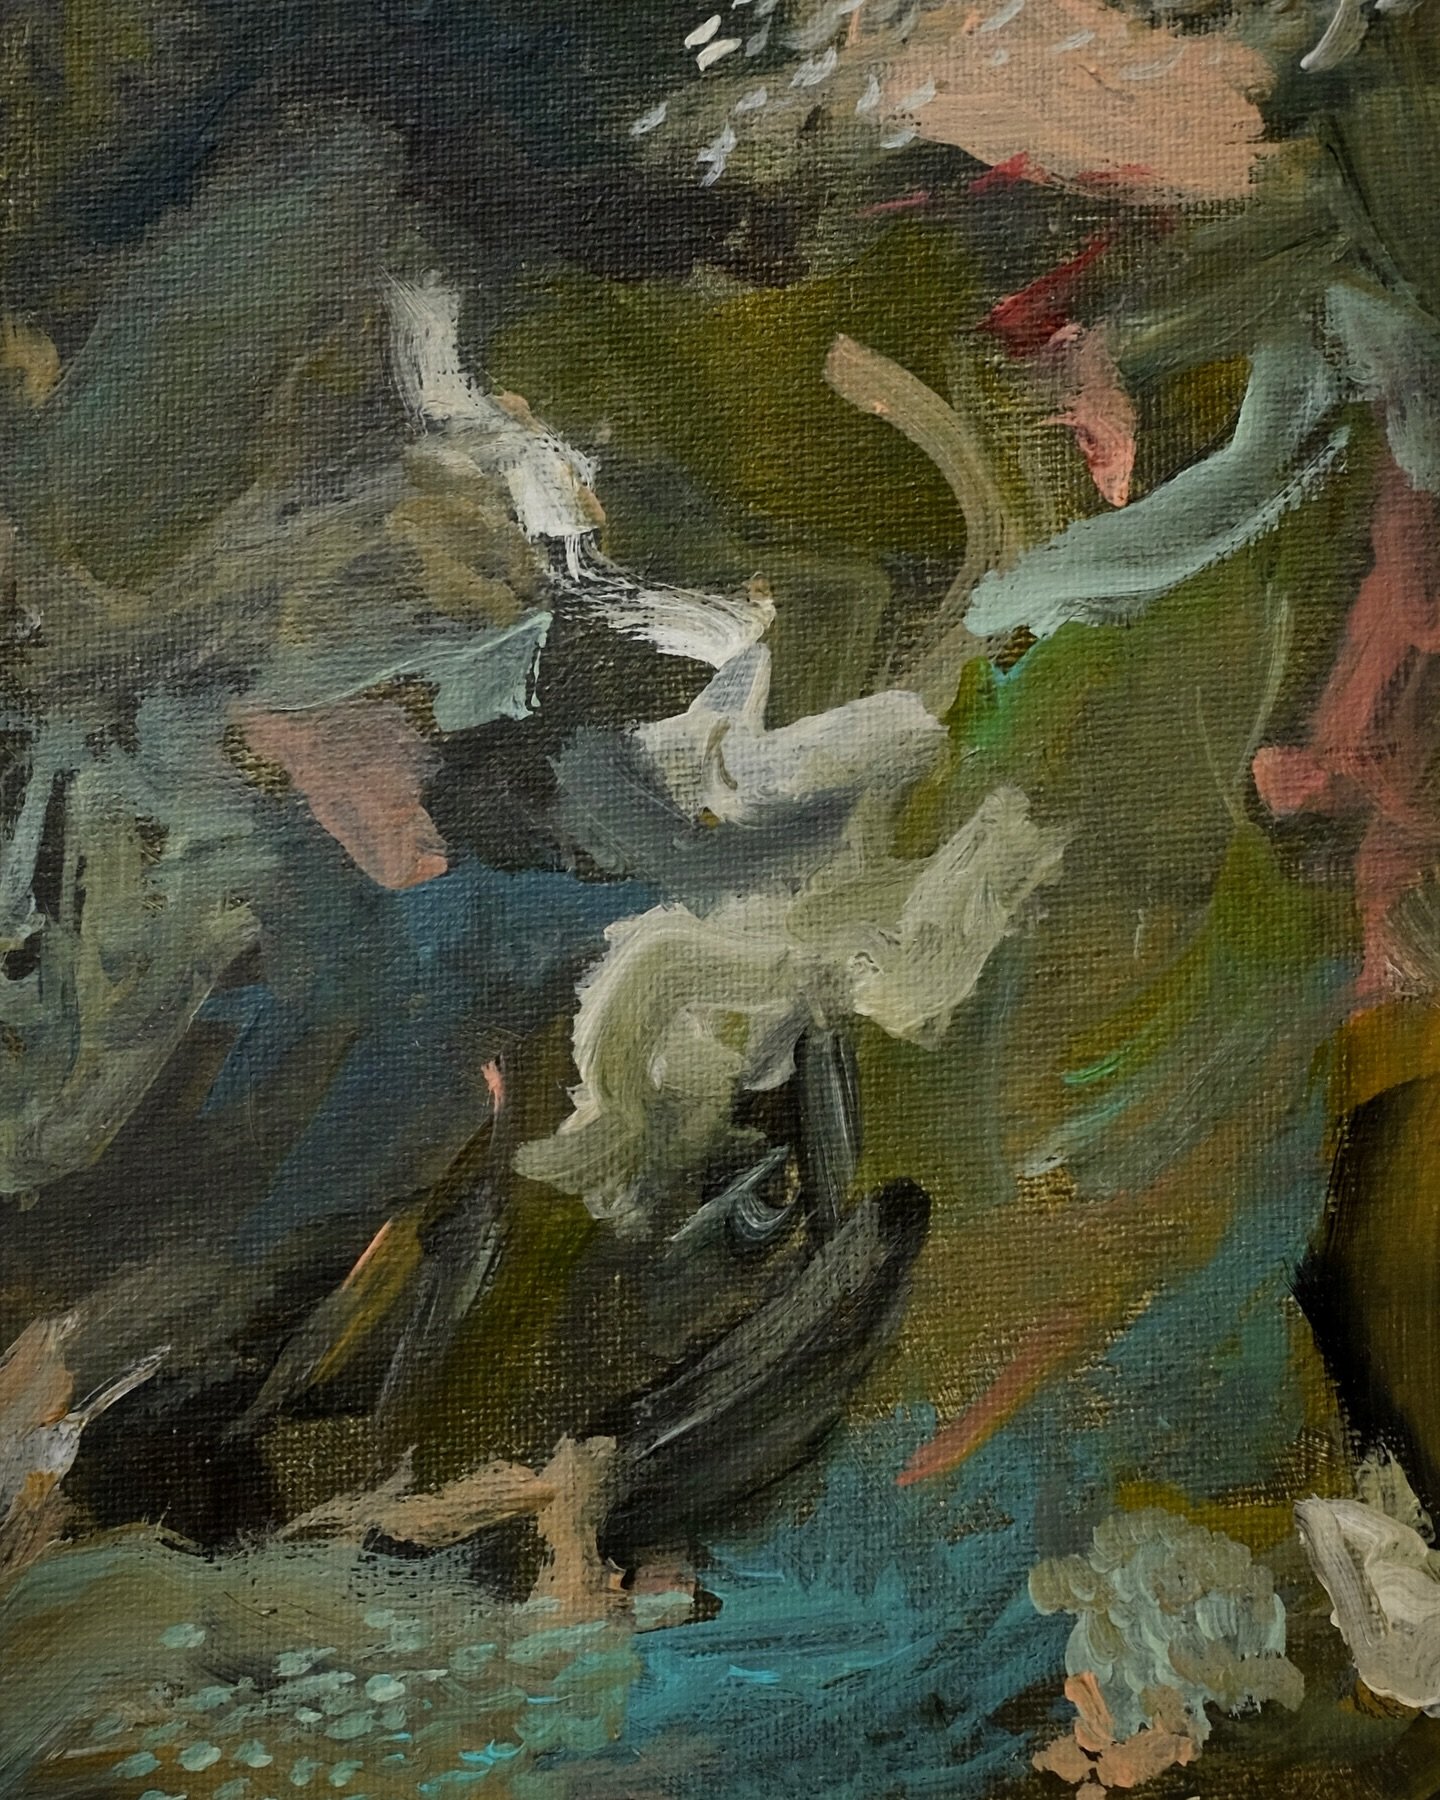 &ldquo;Abstraction allows for endless possibilities and interpretations&ldquo; - Helen Frankenthaler